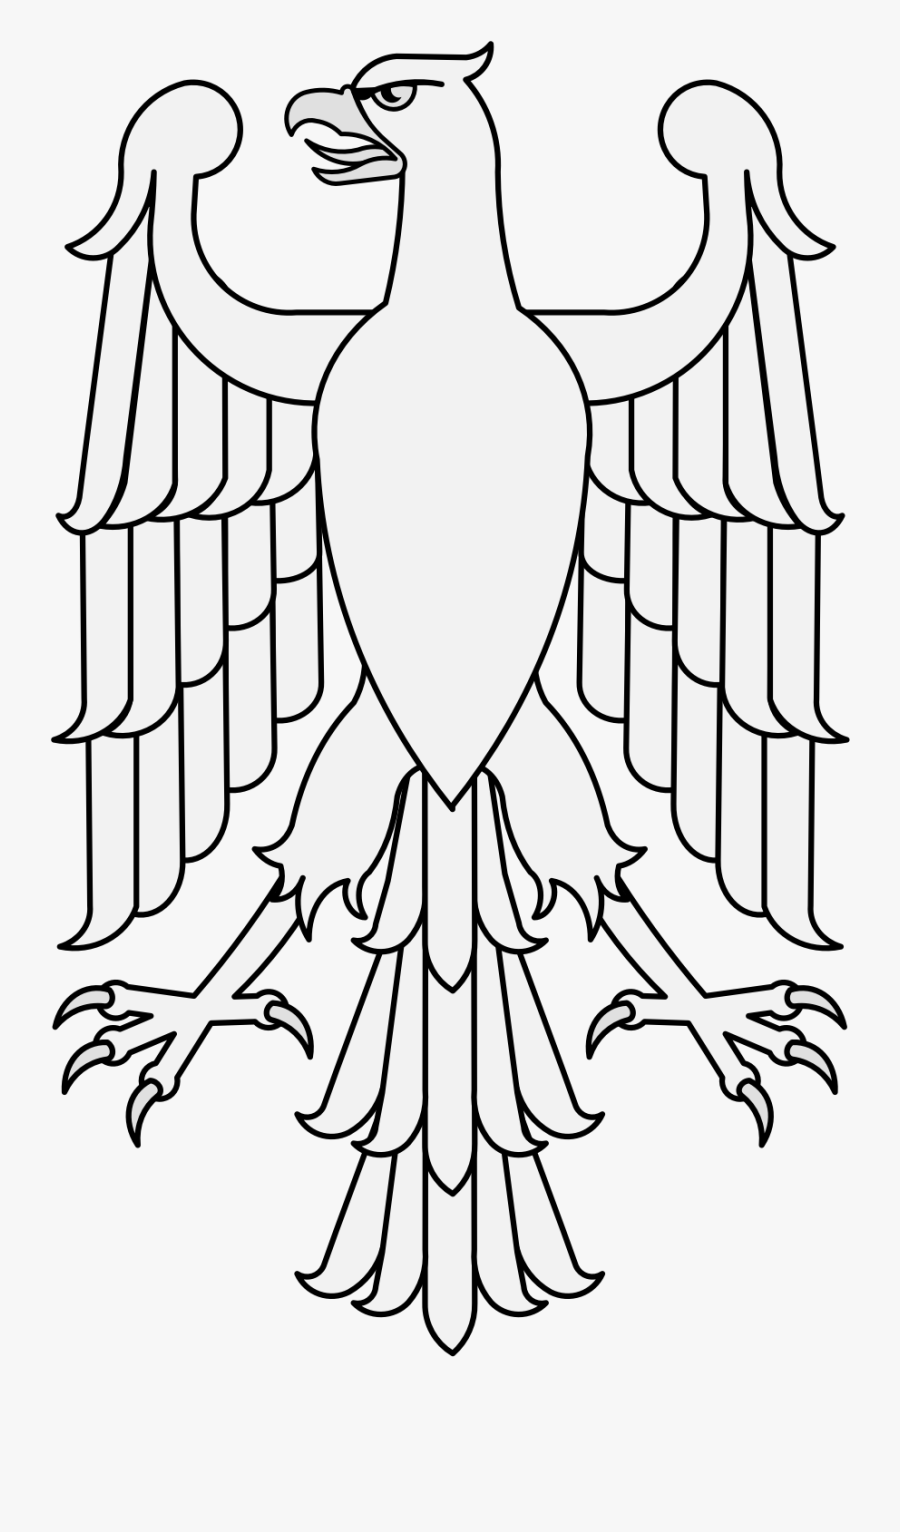 Falconiformes, Transparent Clipart